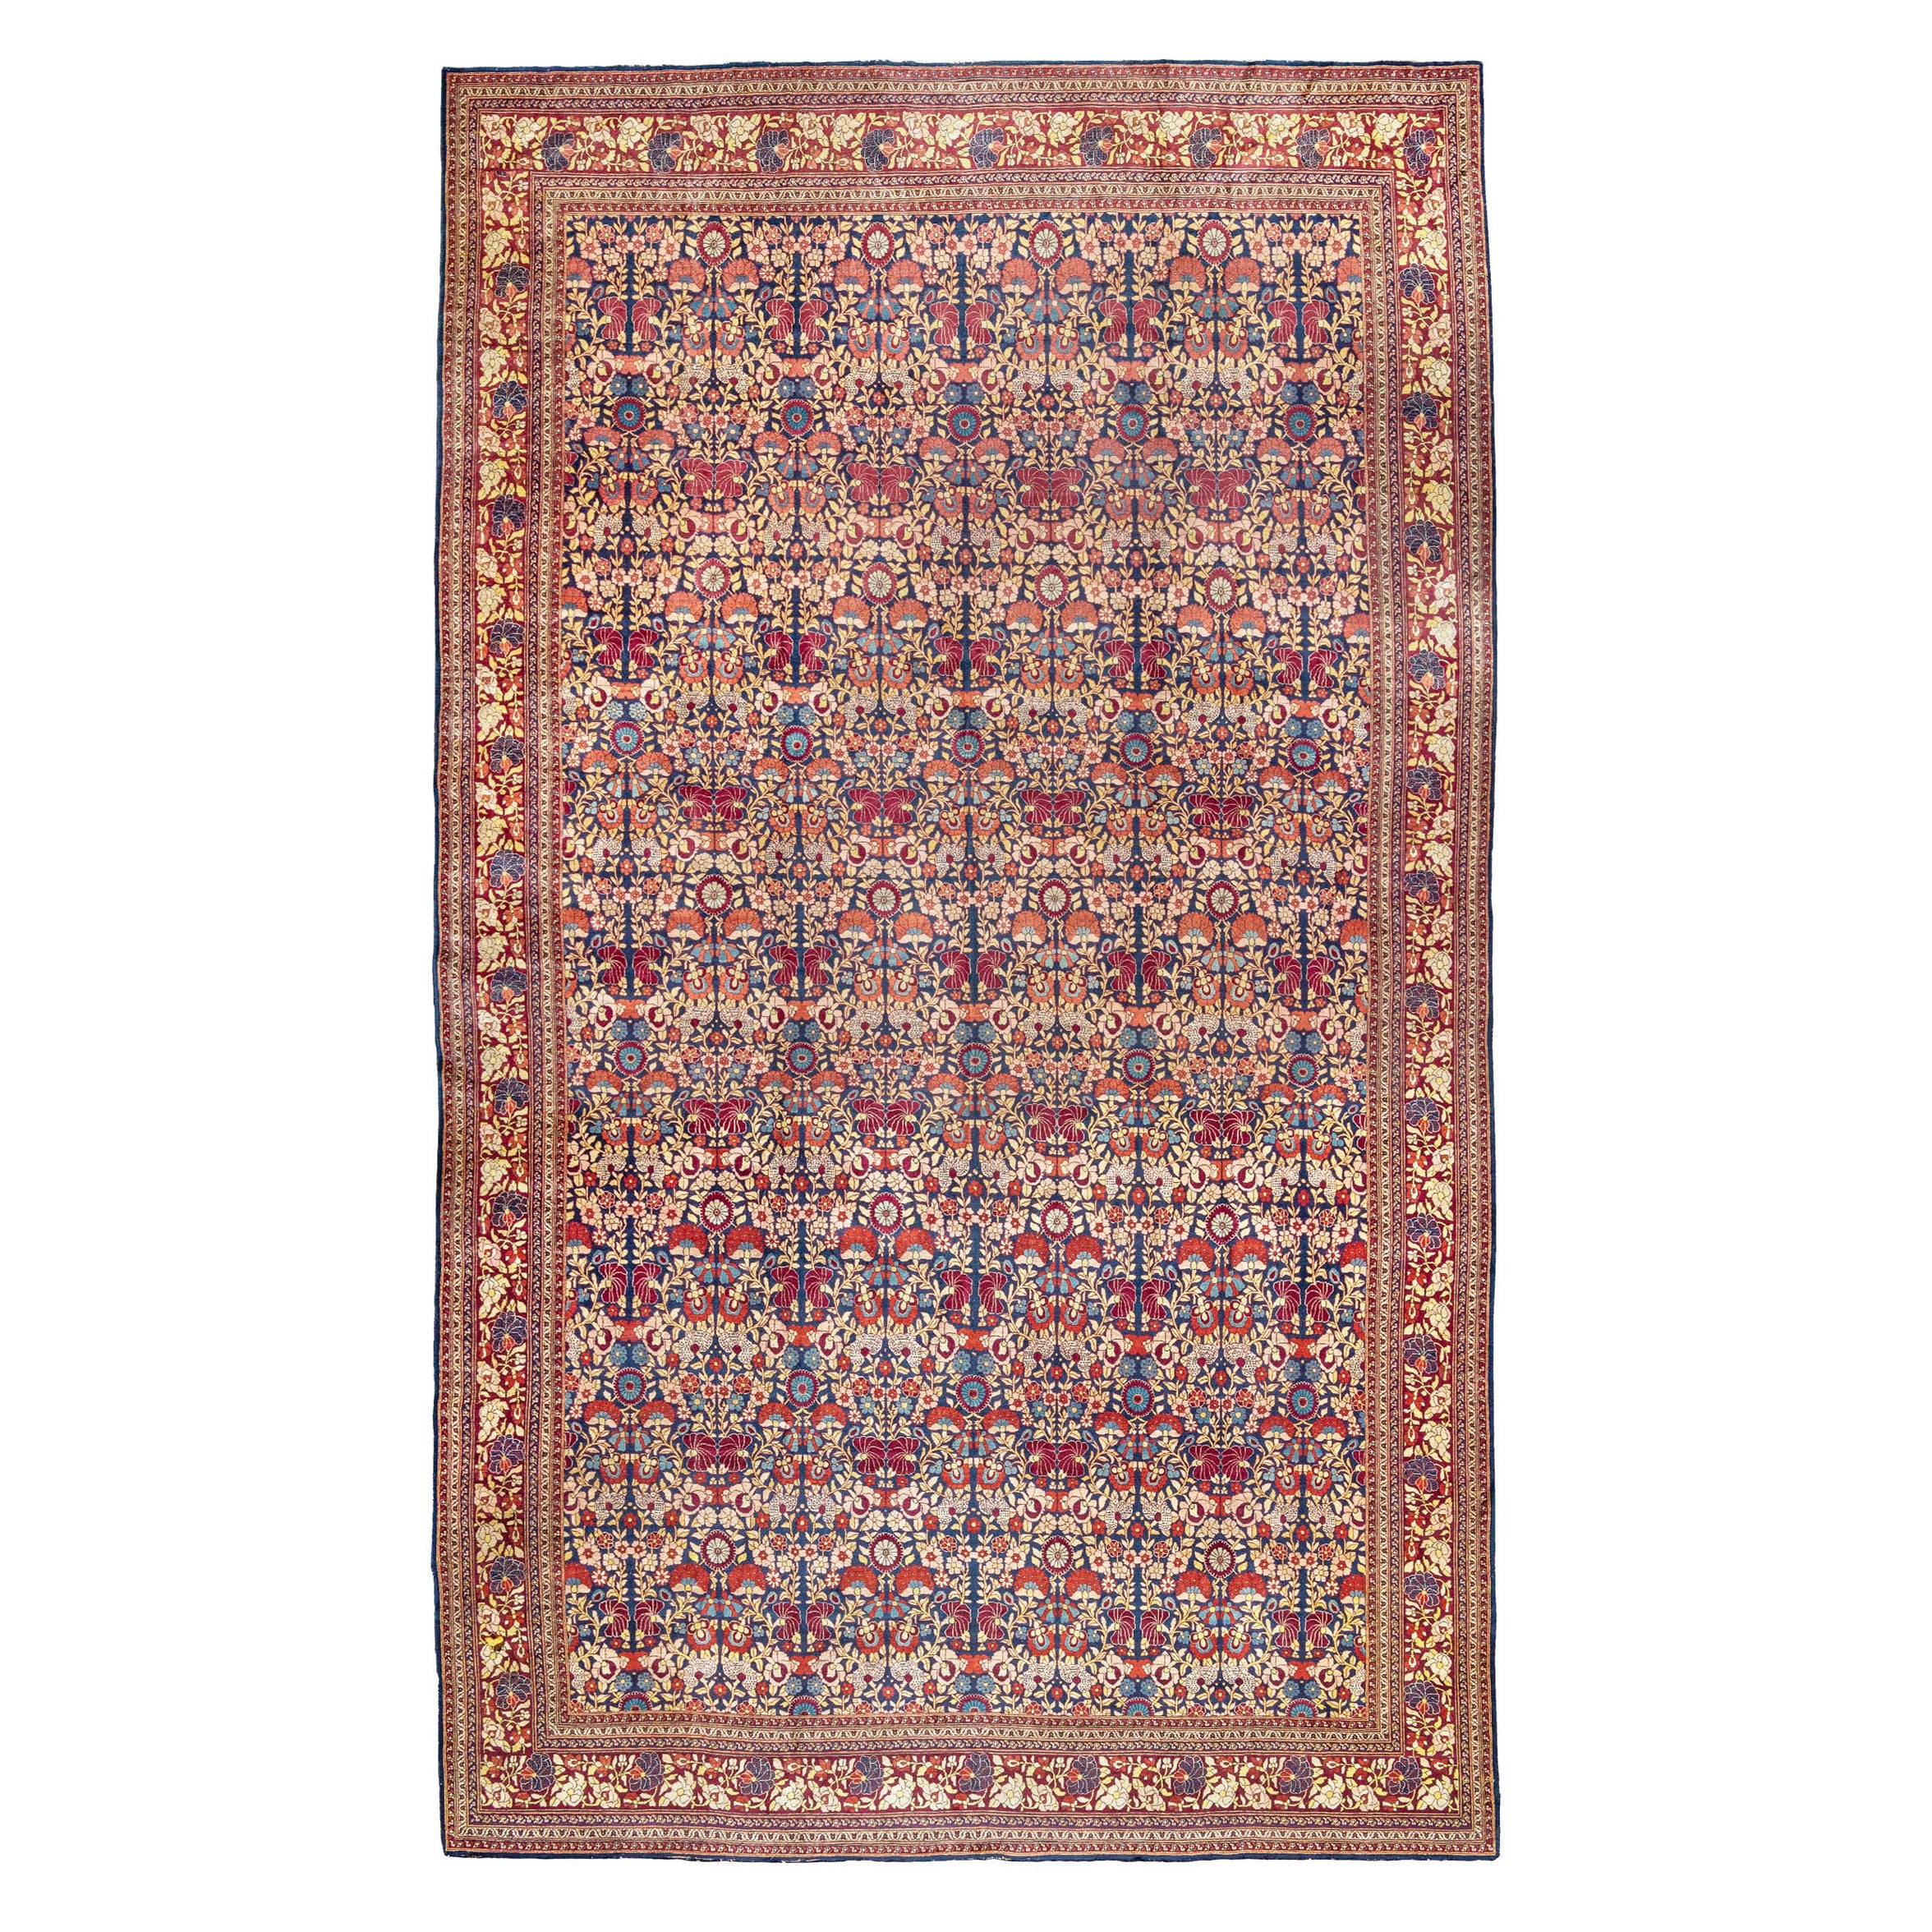 Antique Large Oversized Persian Mashad Carpet, c. 1900 For Sale